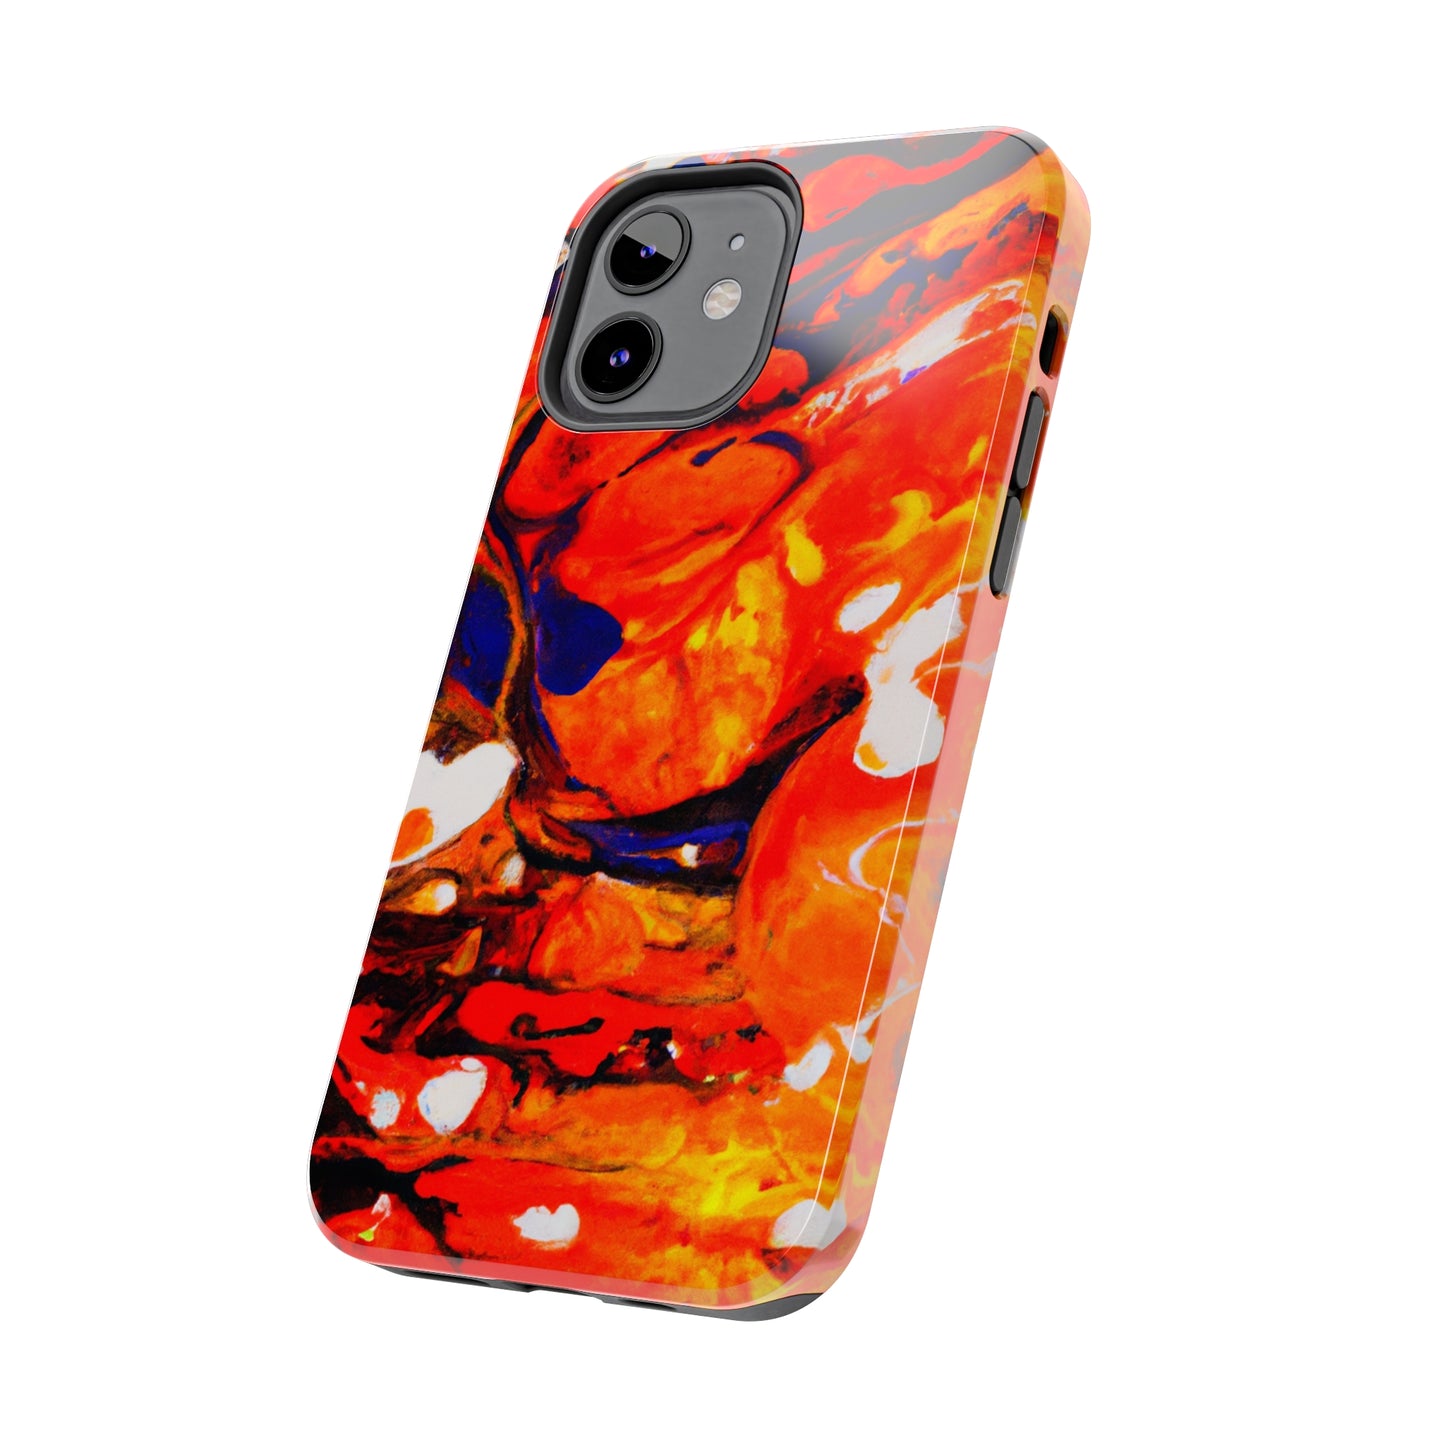 Tough Apple iPhone Cases Ft. Abstract Halloween Pumpkin